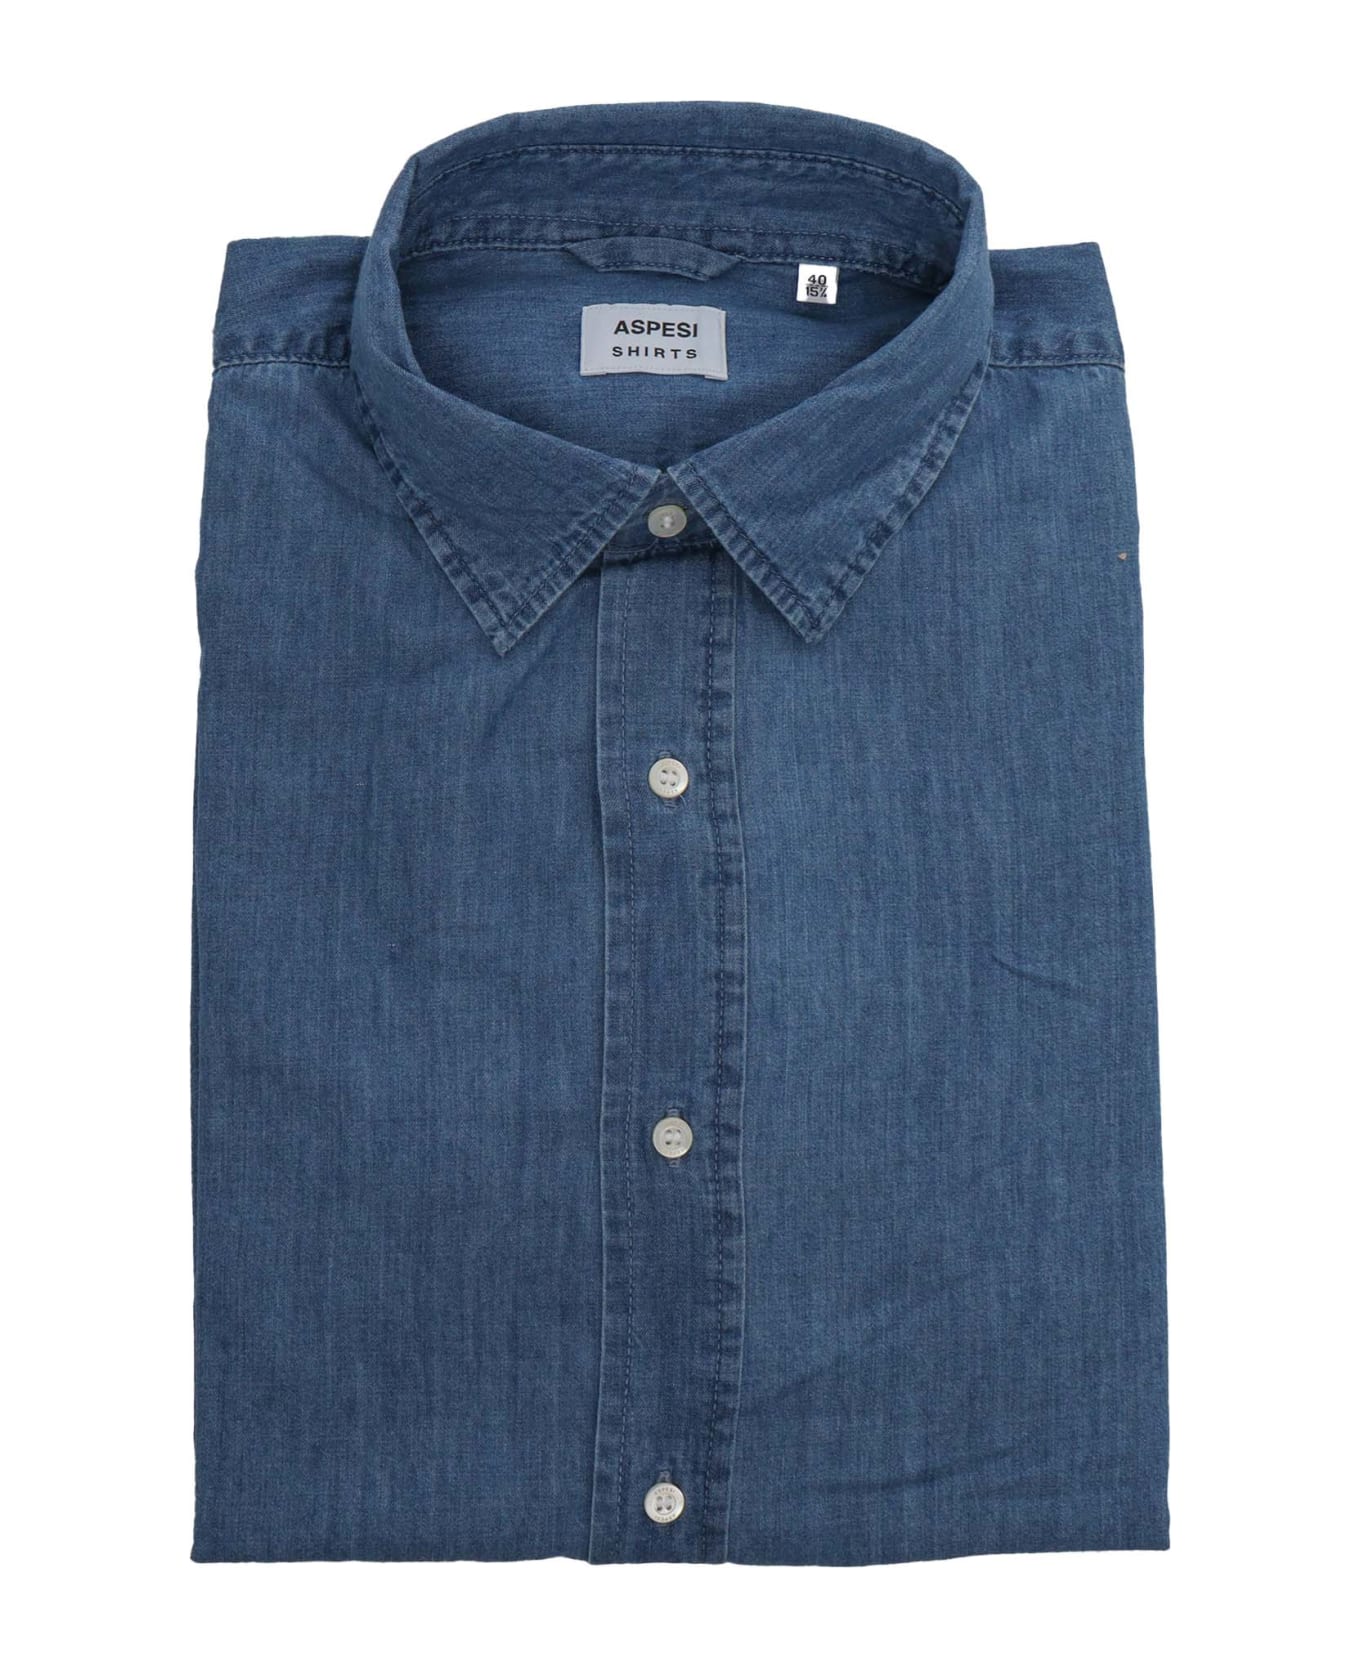 Aspesi Jeans Shirt - BLUE シャツ